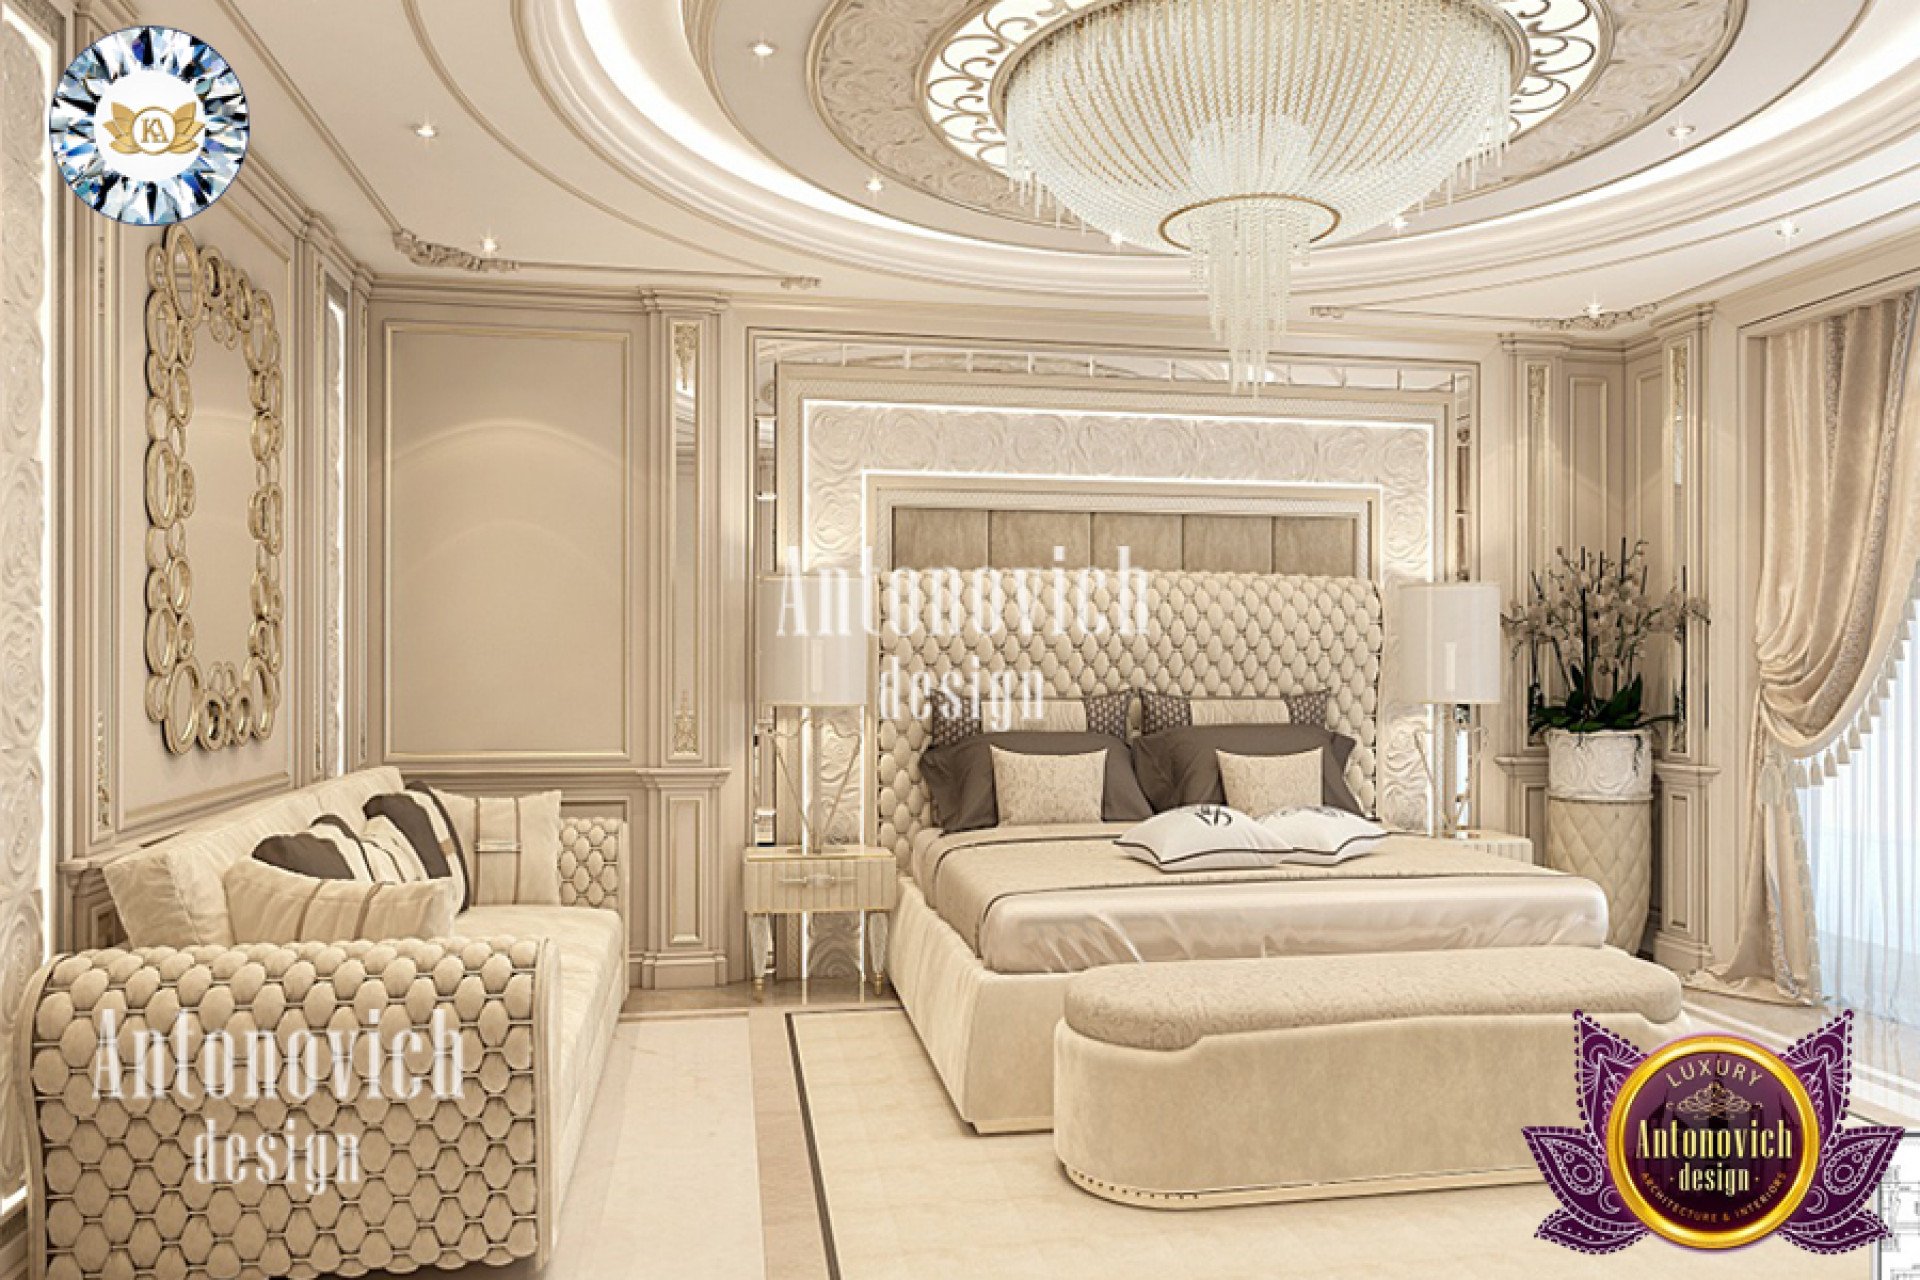 FINEST BEDROOM INTERIOR DESIGN BY LUXURY ANTONOVICH DESIGN